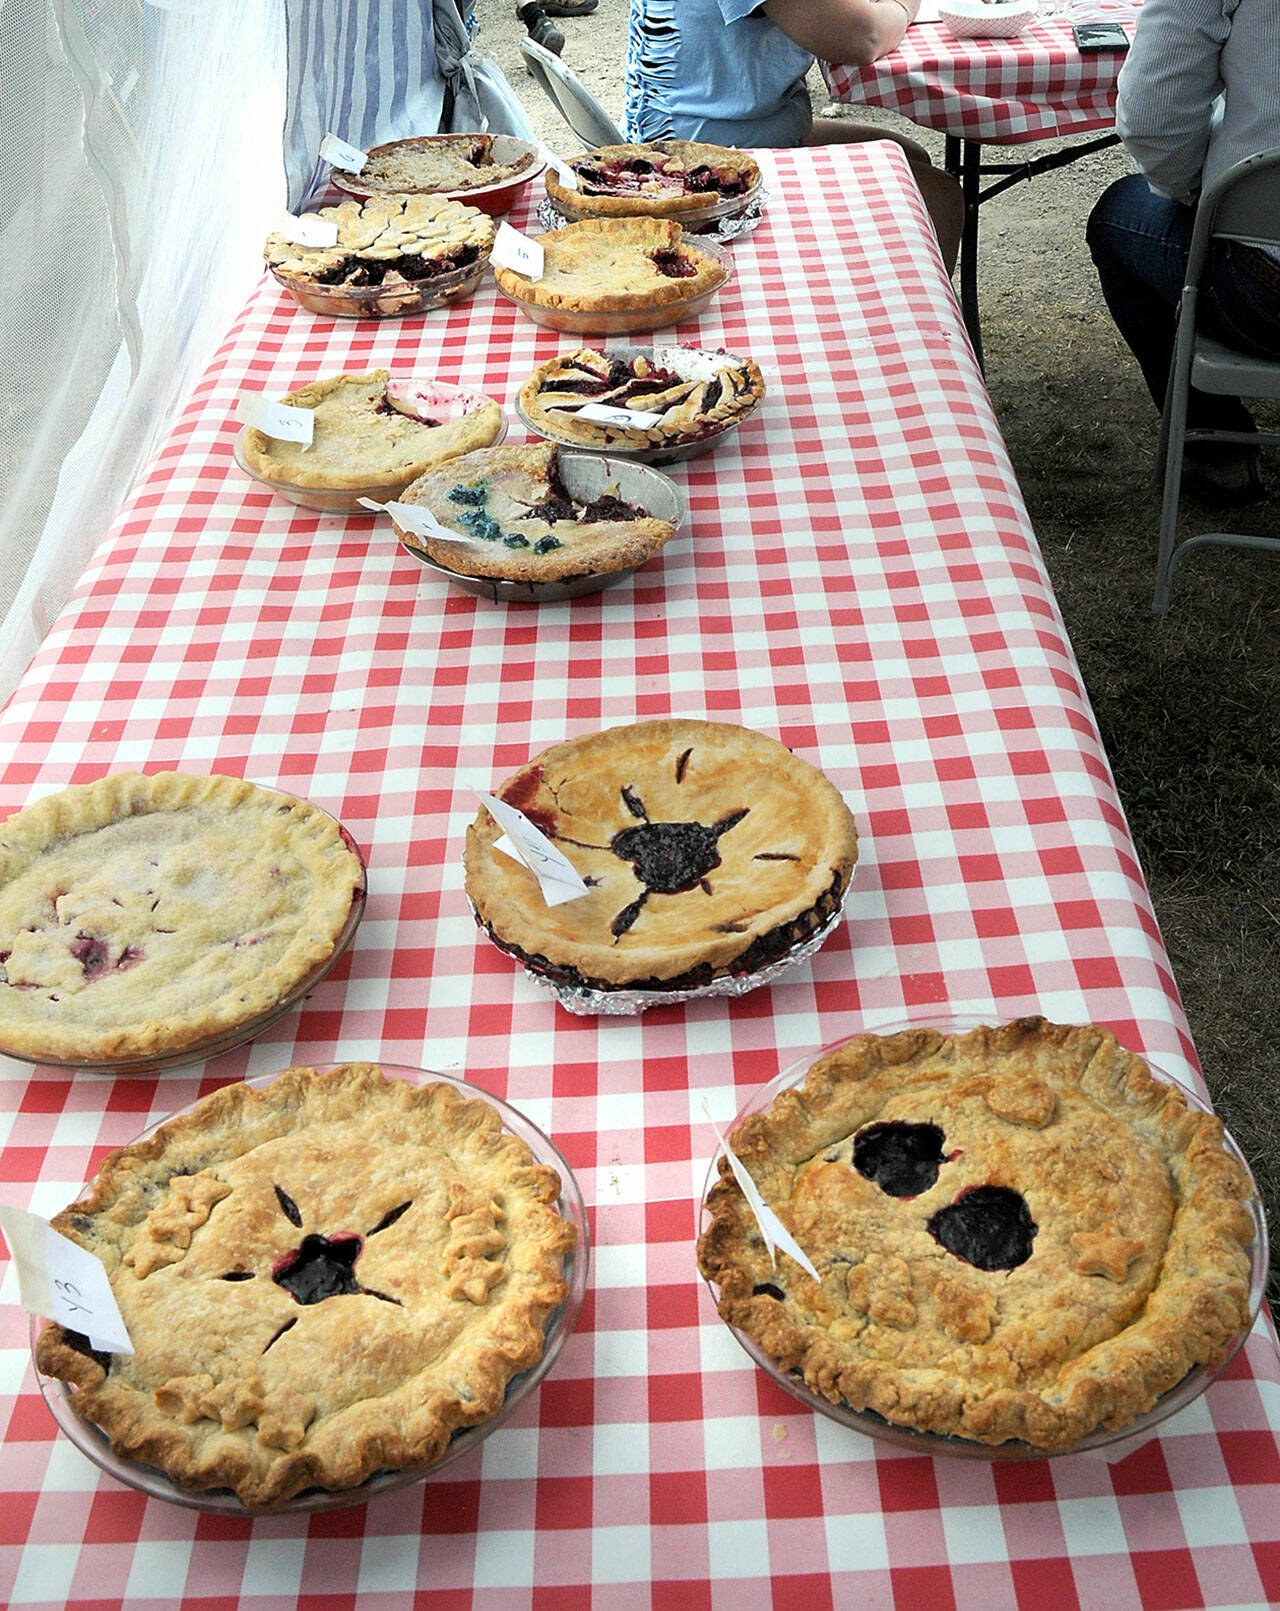 Homemade blackberry pies wait for judging during Saturday’s Joyce Daze Wild Blackberry Festival. (Keith Thorpe/Peninsula Daily News)